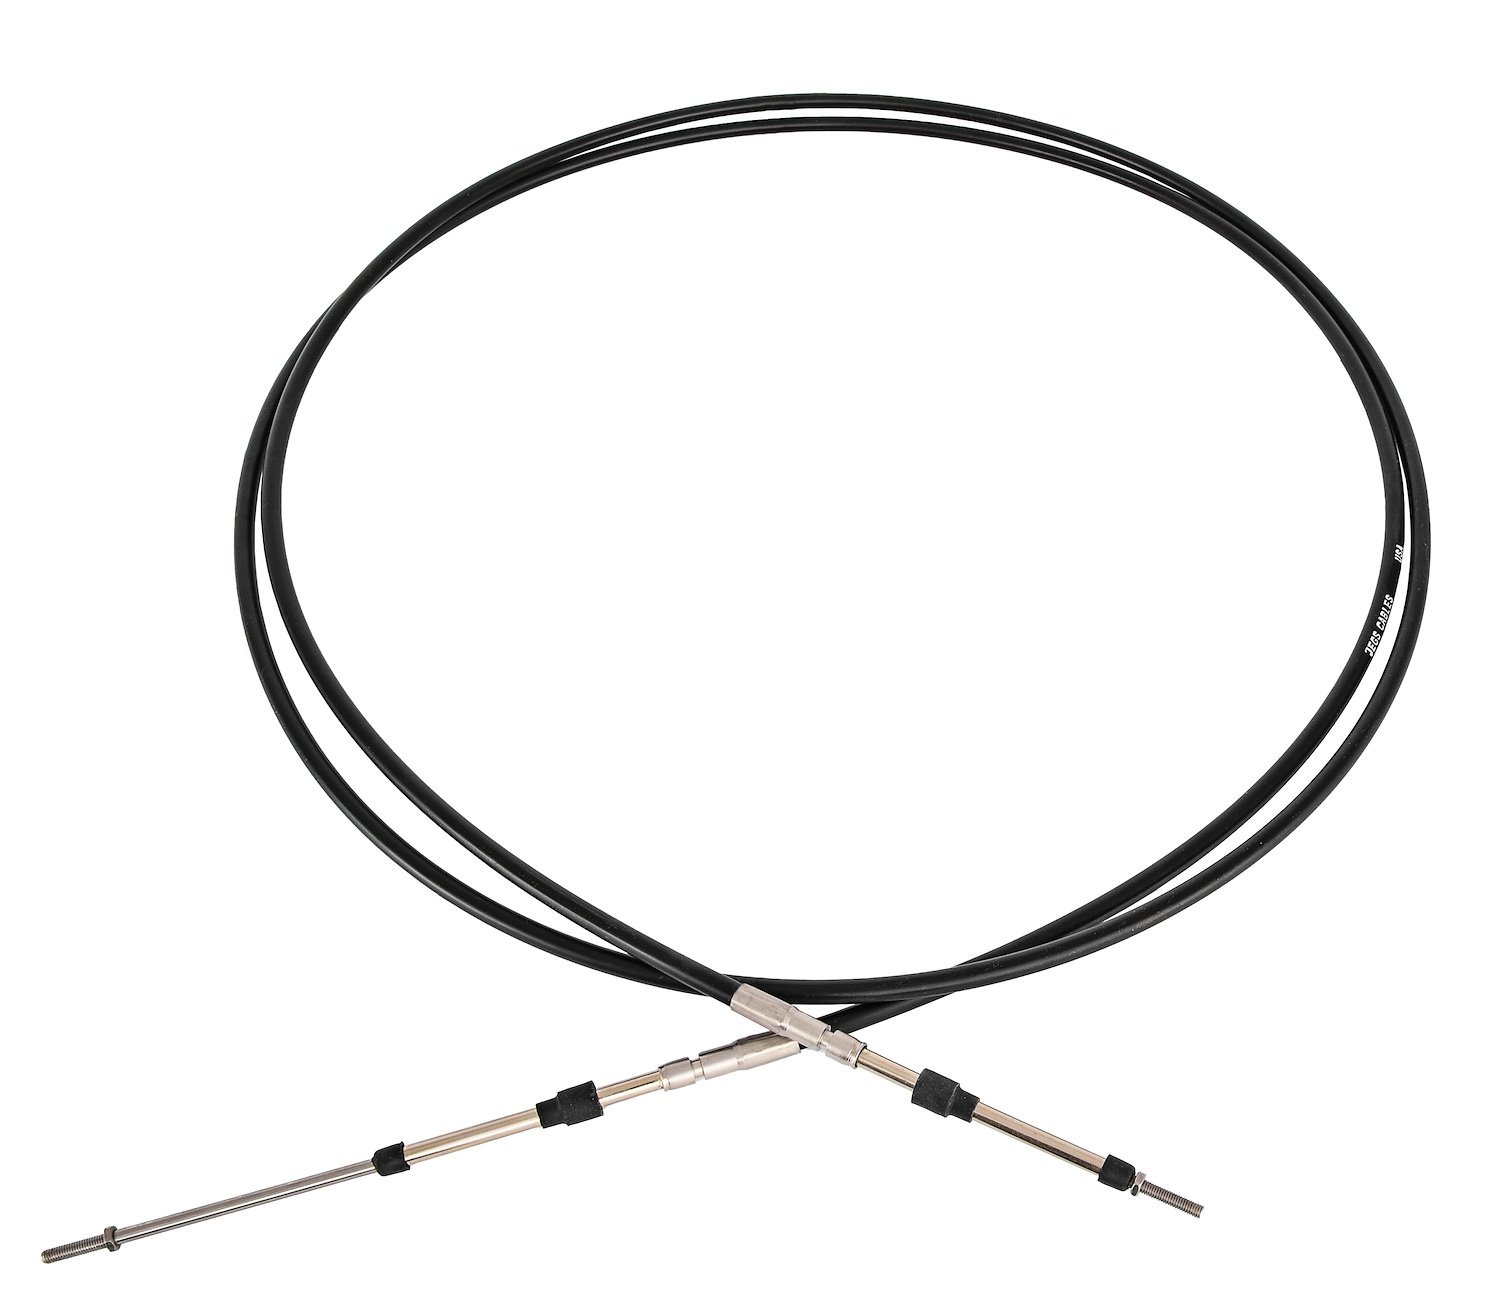 Morse Push/Pull Cable Length: 13 ft. Long